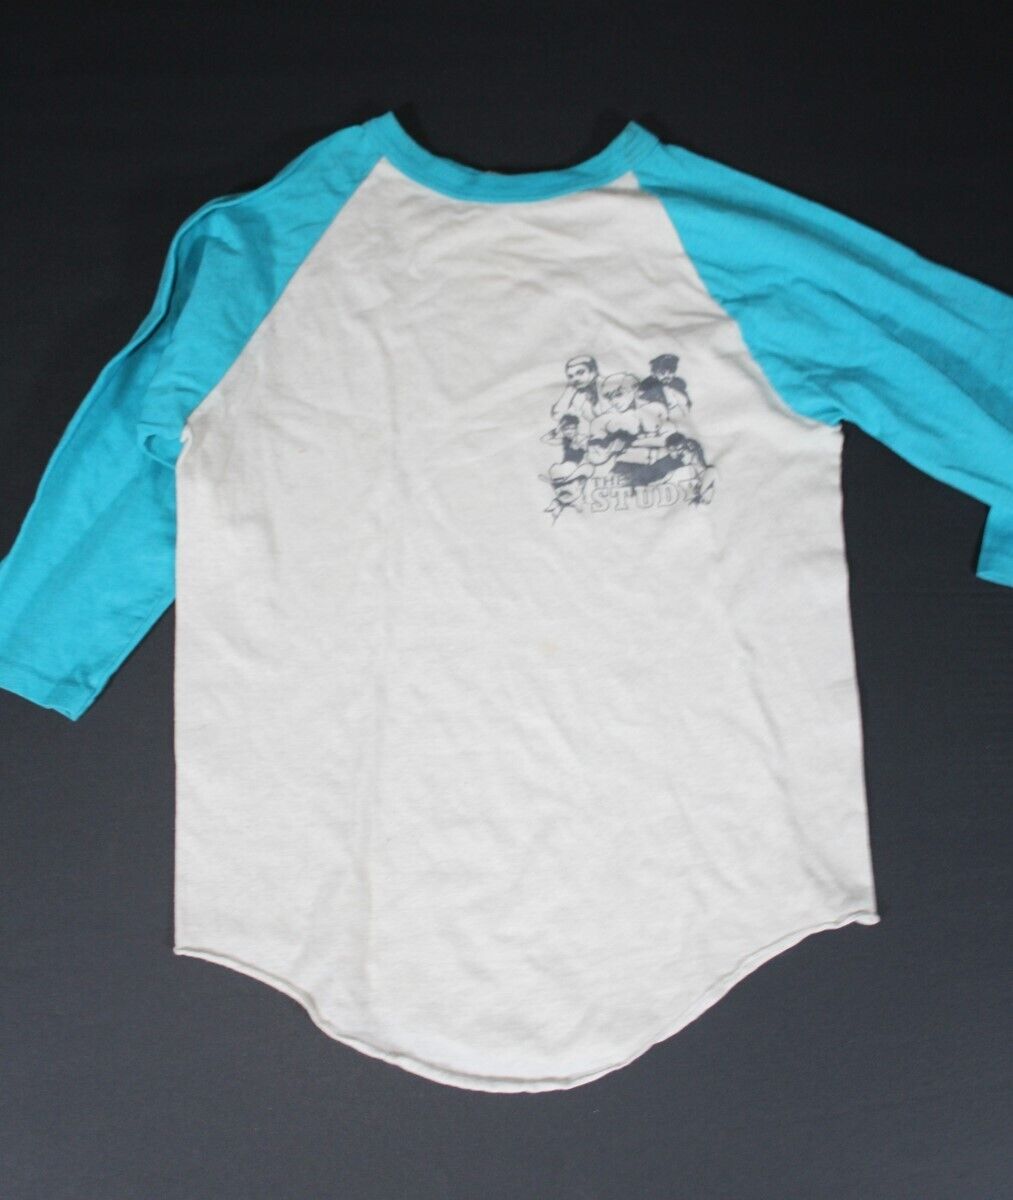  Vintage 1970's Gay Pulp Art Tom Of Finland Baseball Style T-Shirt 